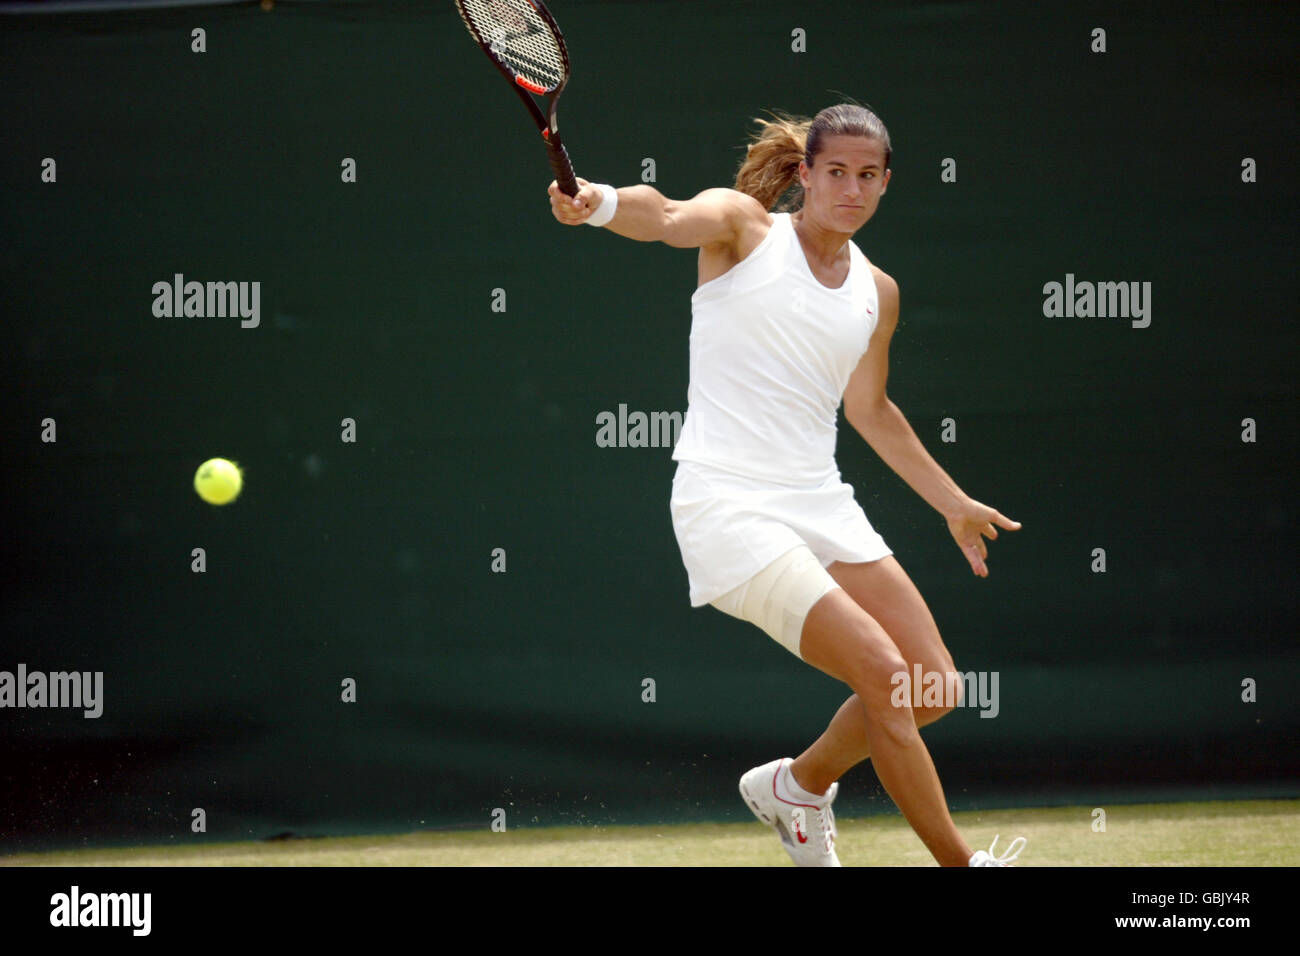 Tennis - Wimbledon 2004 - quarto turno - Amelie Mauresmo / Silvia farina Elia. Amelie Mauresmo gioca un tiro a dorso di campo durante la sua quarta partita Foto Stock